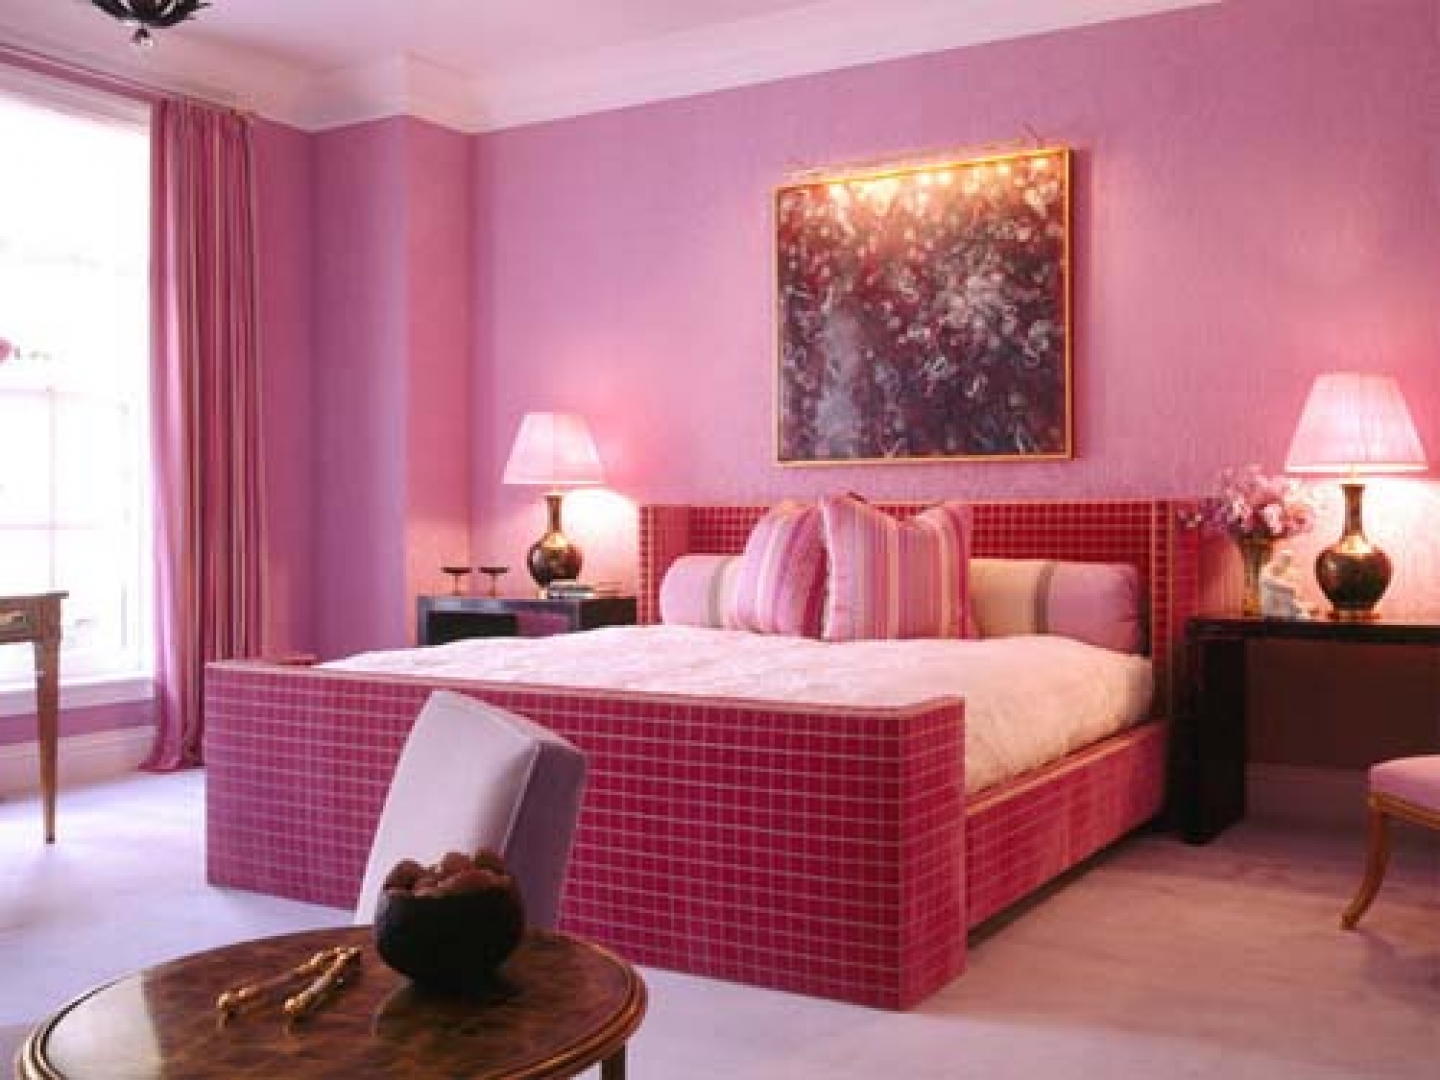 10415-teenage-girls-bedroom-design-idp-interior-design-pic